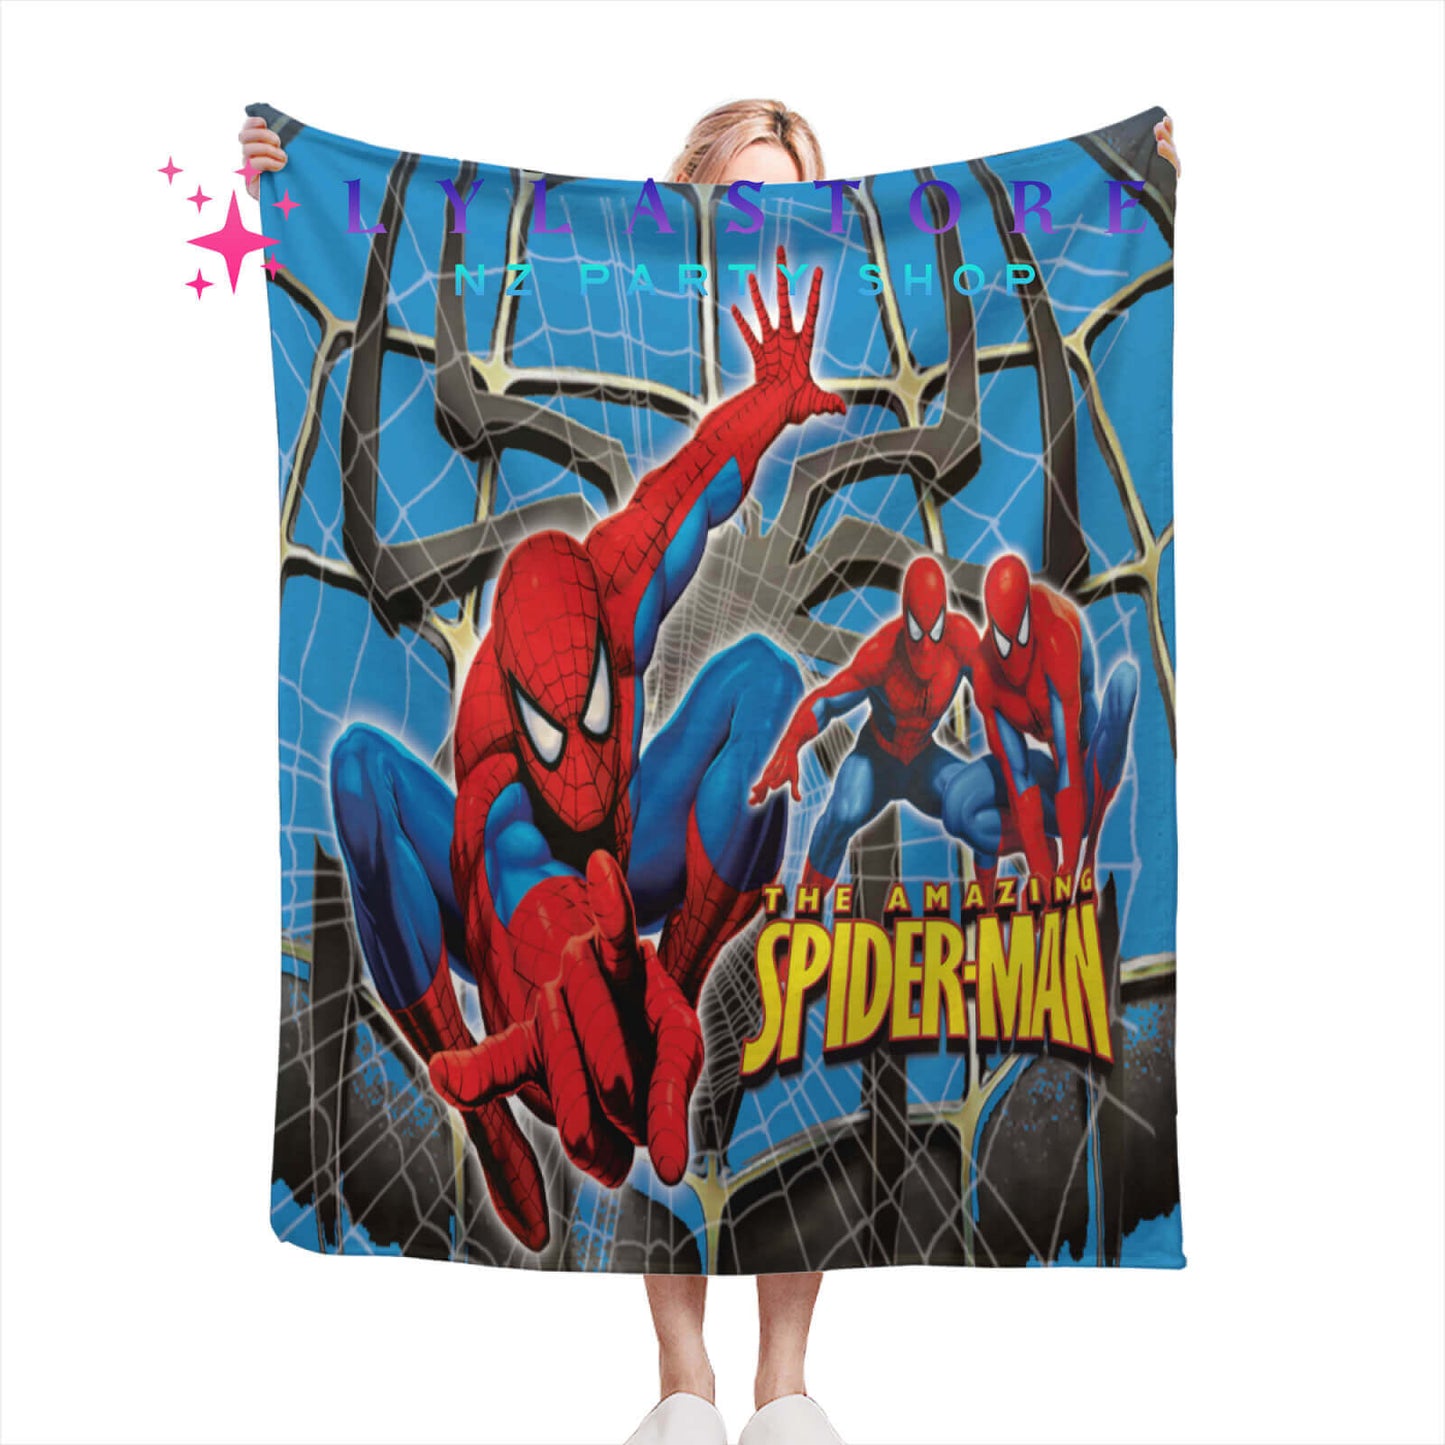 spiderman-blanket-nz-lylastore.com